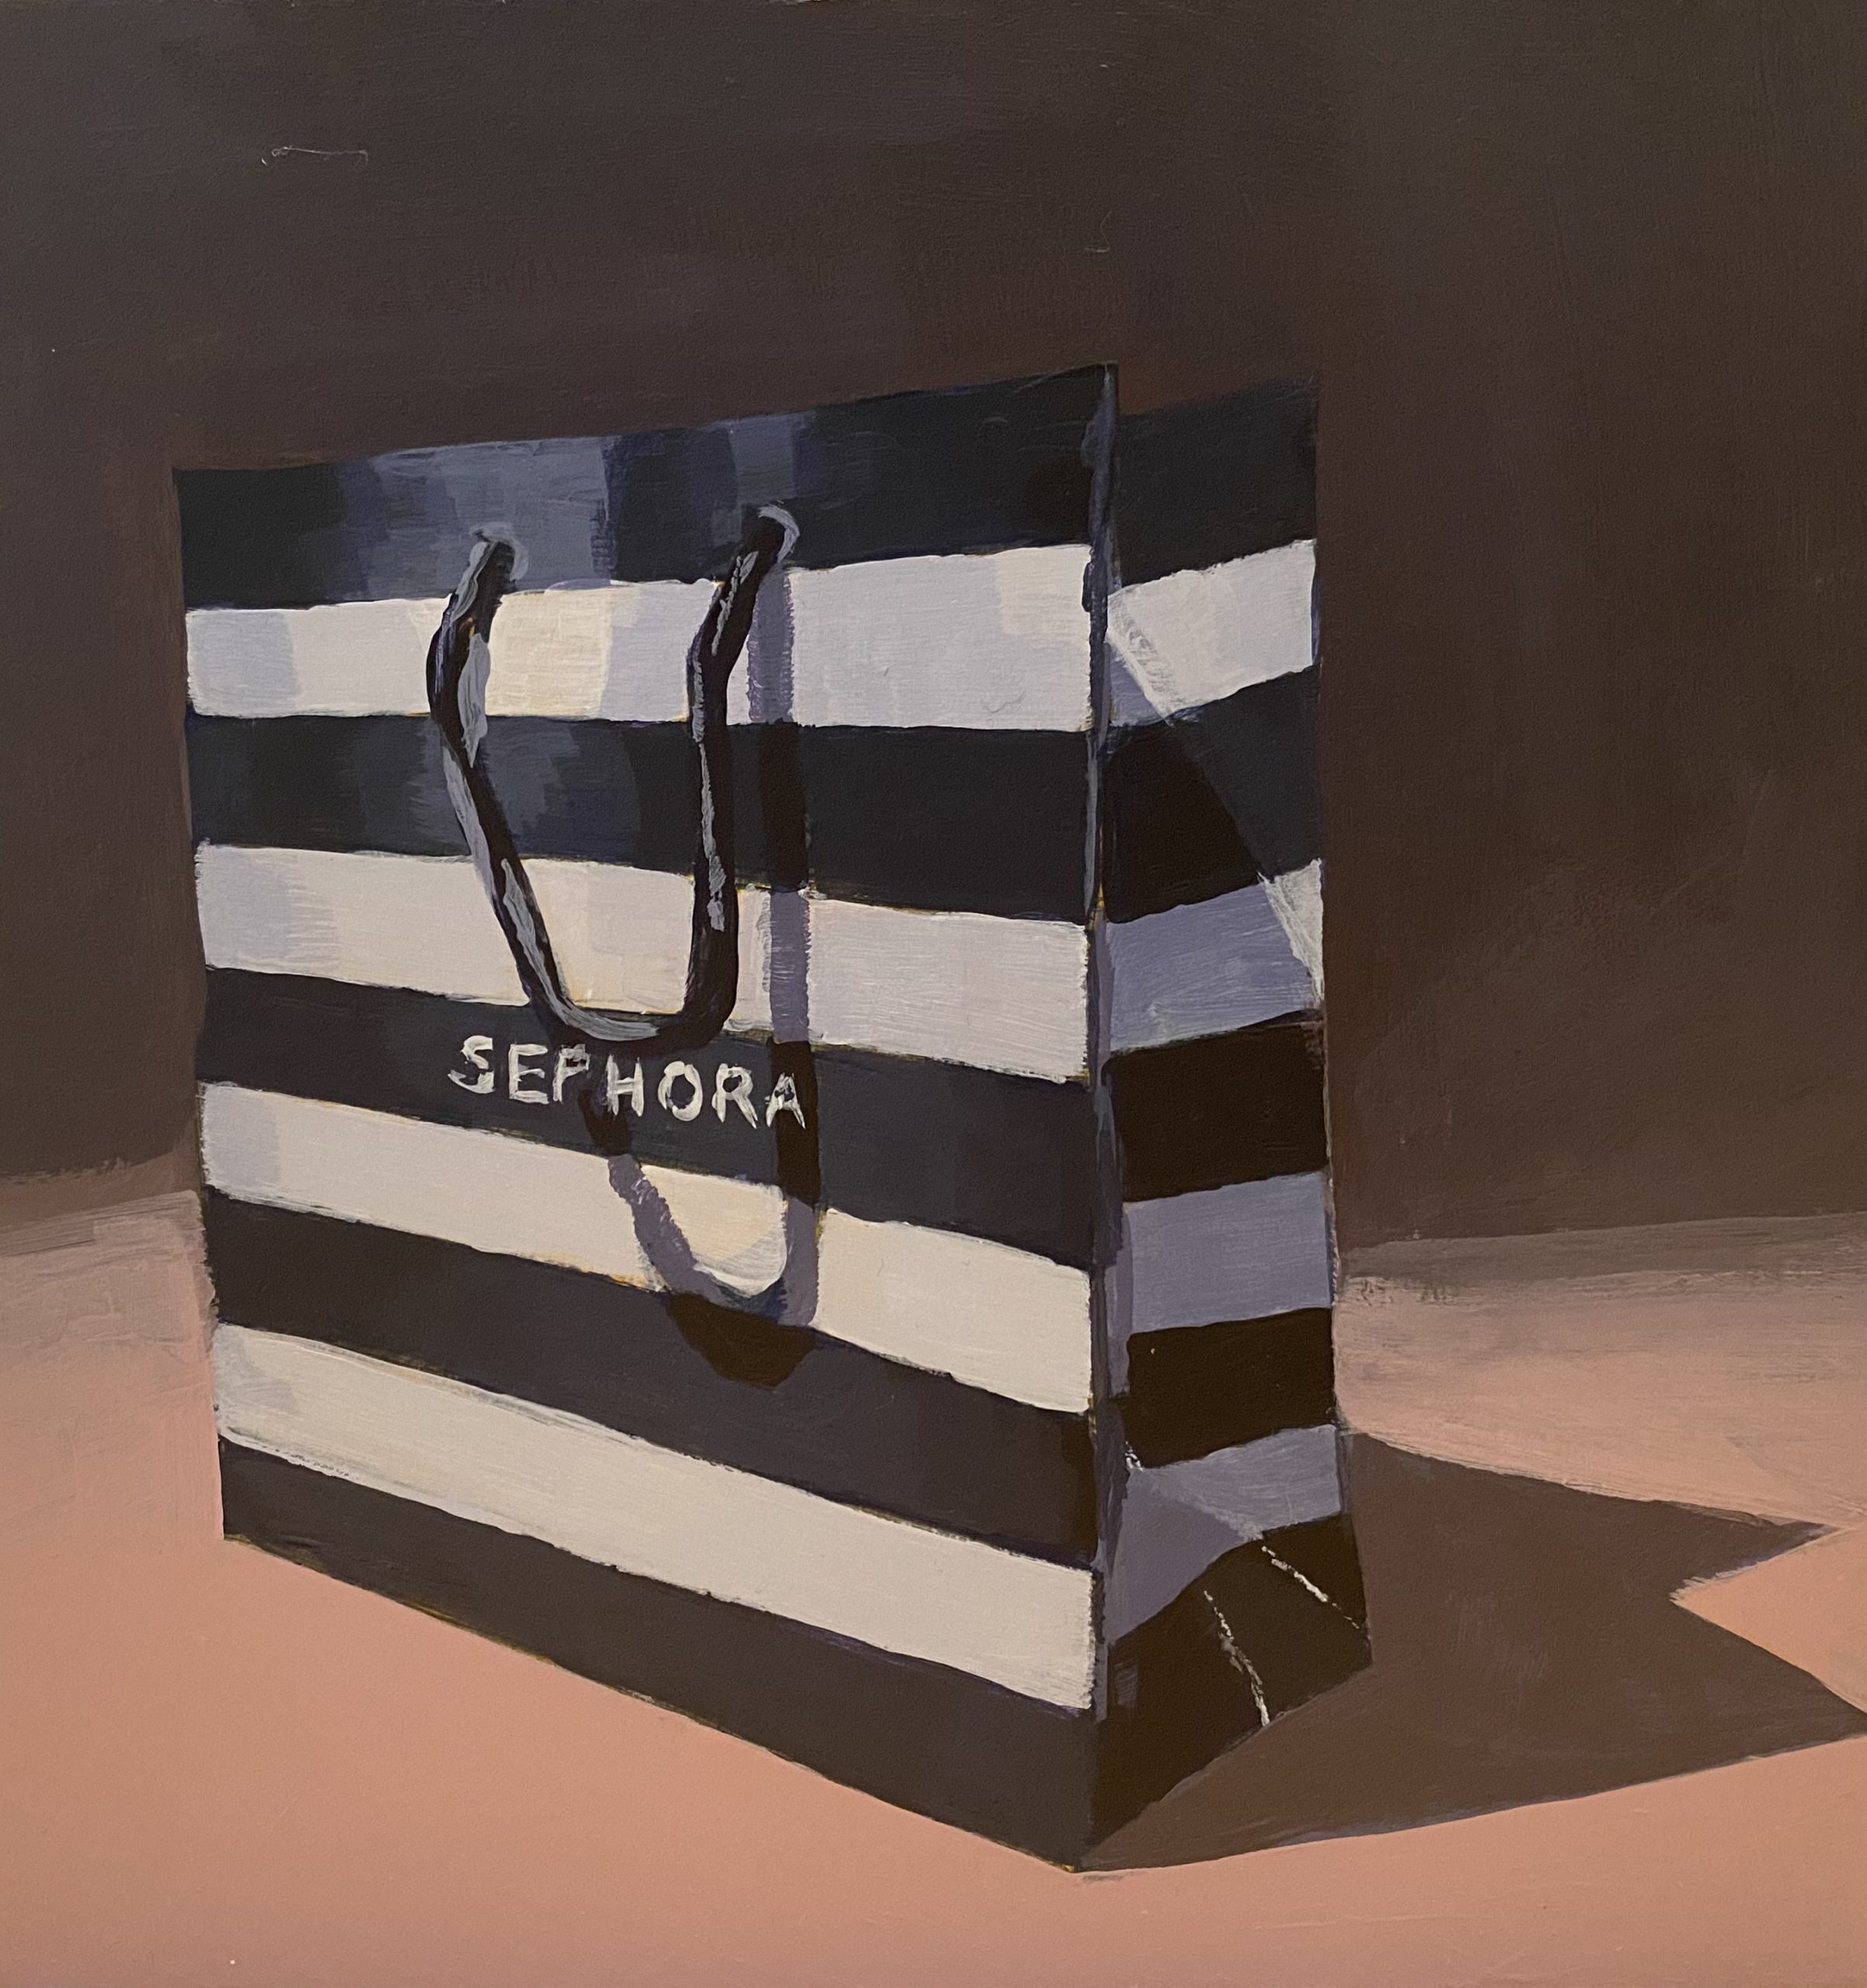 What’d You Buy? (Sephora Bag)